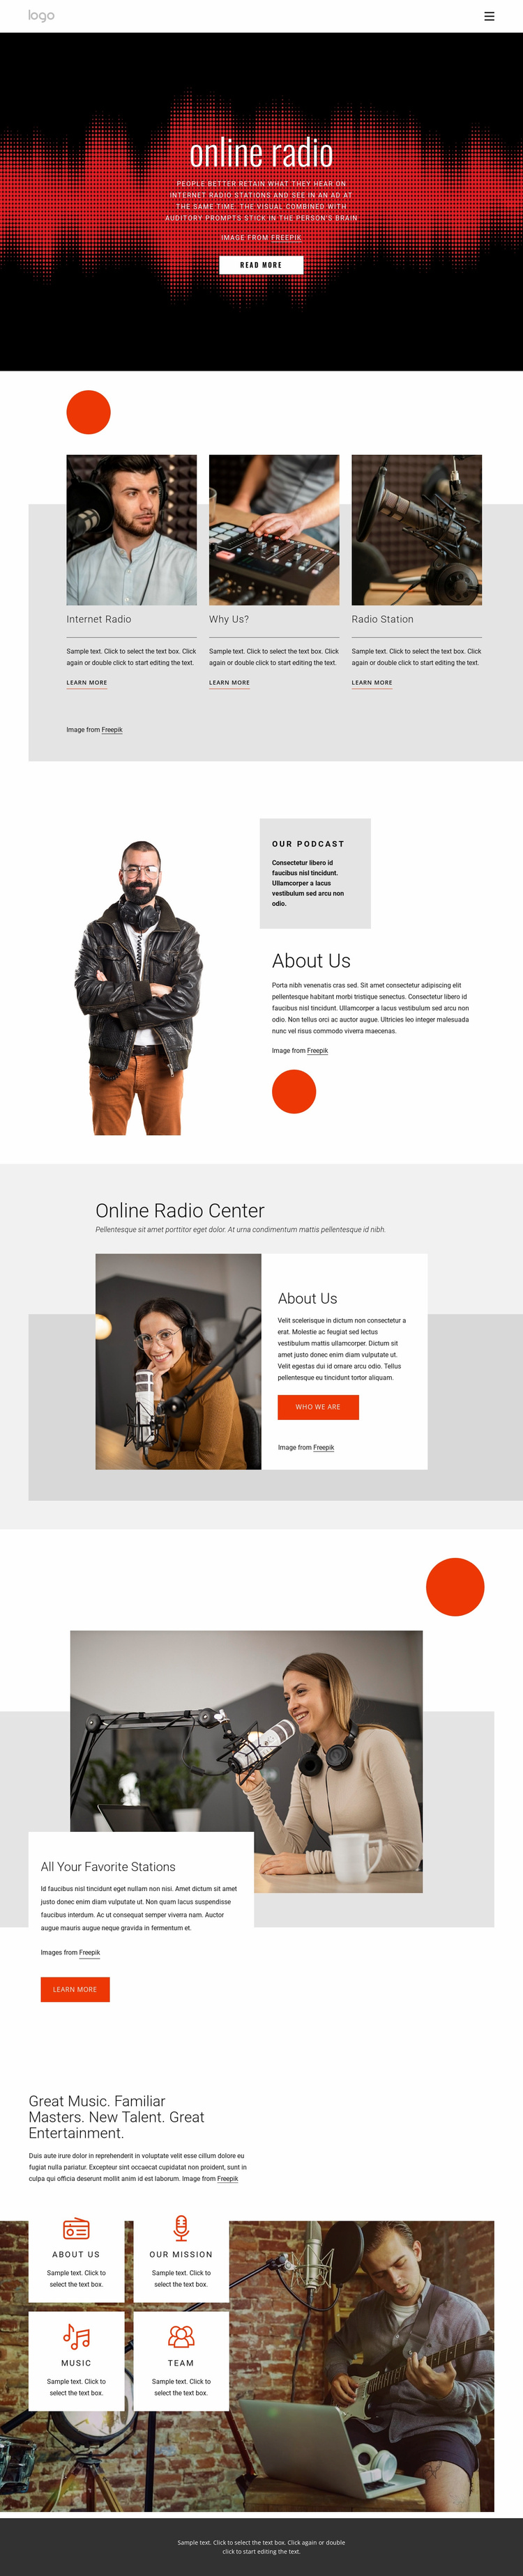 Online radio shows Landing Page